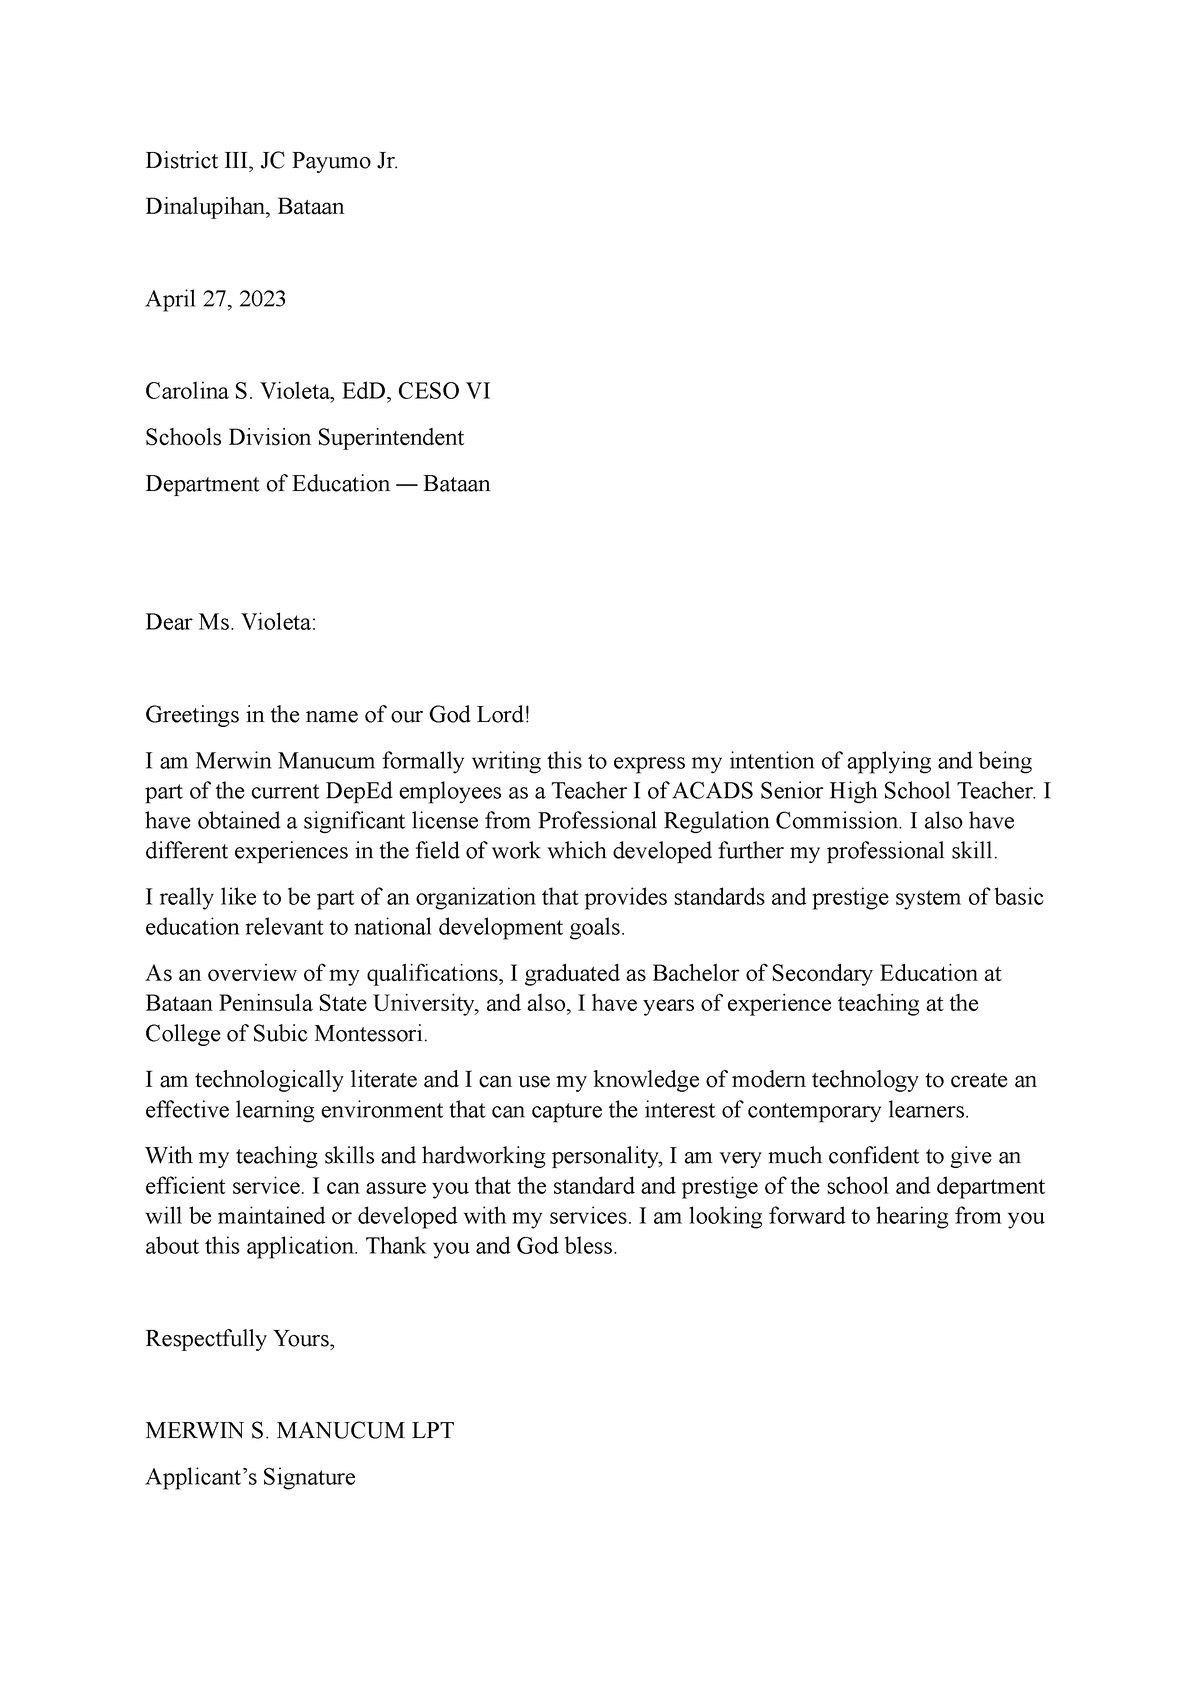 Letter OF Intent Senior HIGH - District III, JC Payumo Jr. Dinalupihan ...